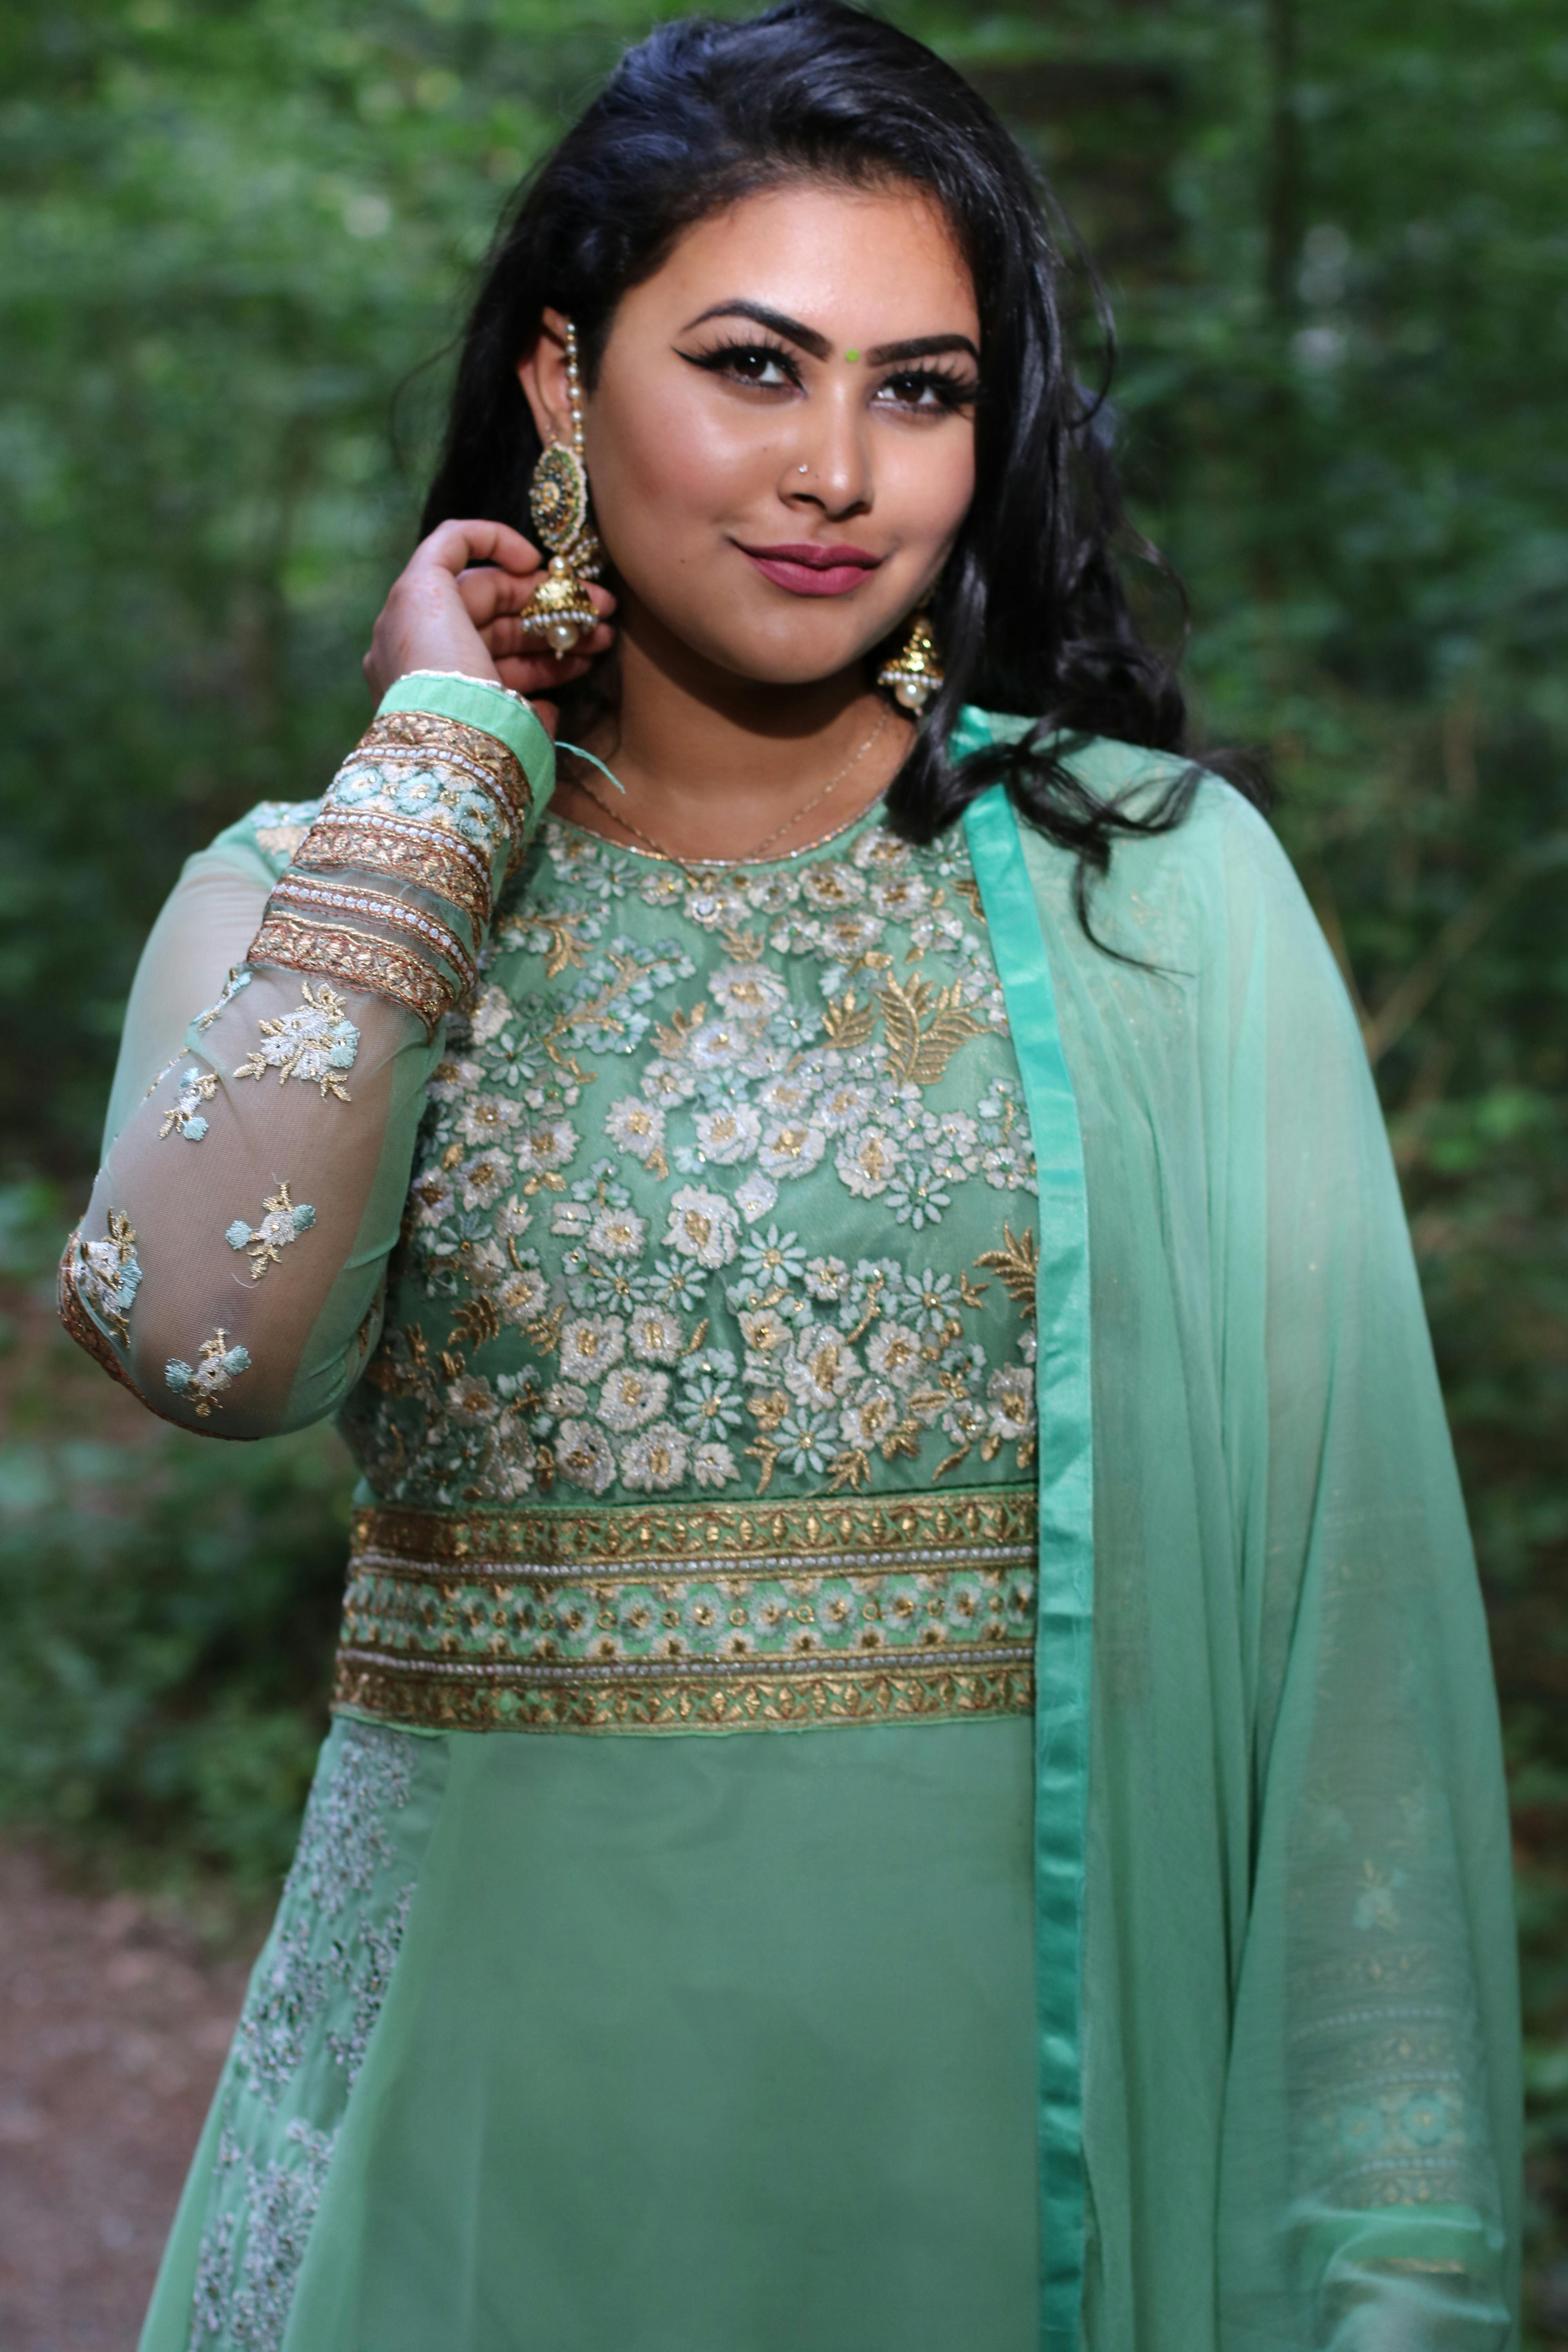 100,000+ Best Indian Girl Photos · 100% Free Download · Pexels Stock Photos